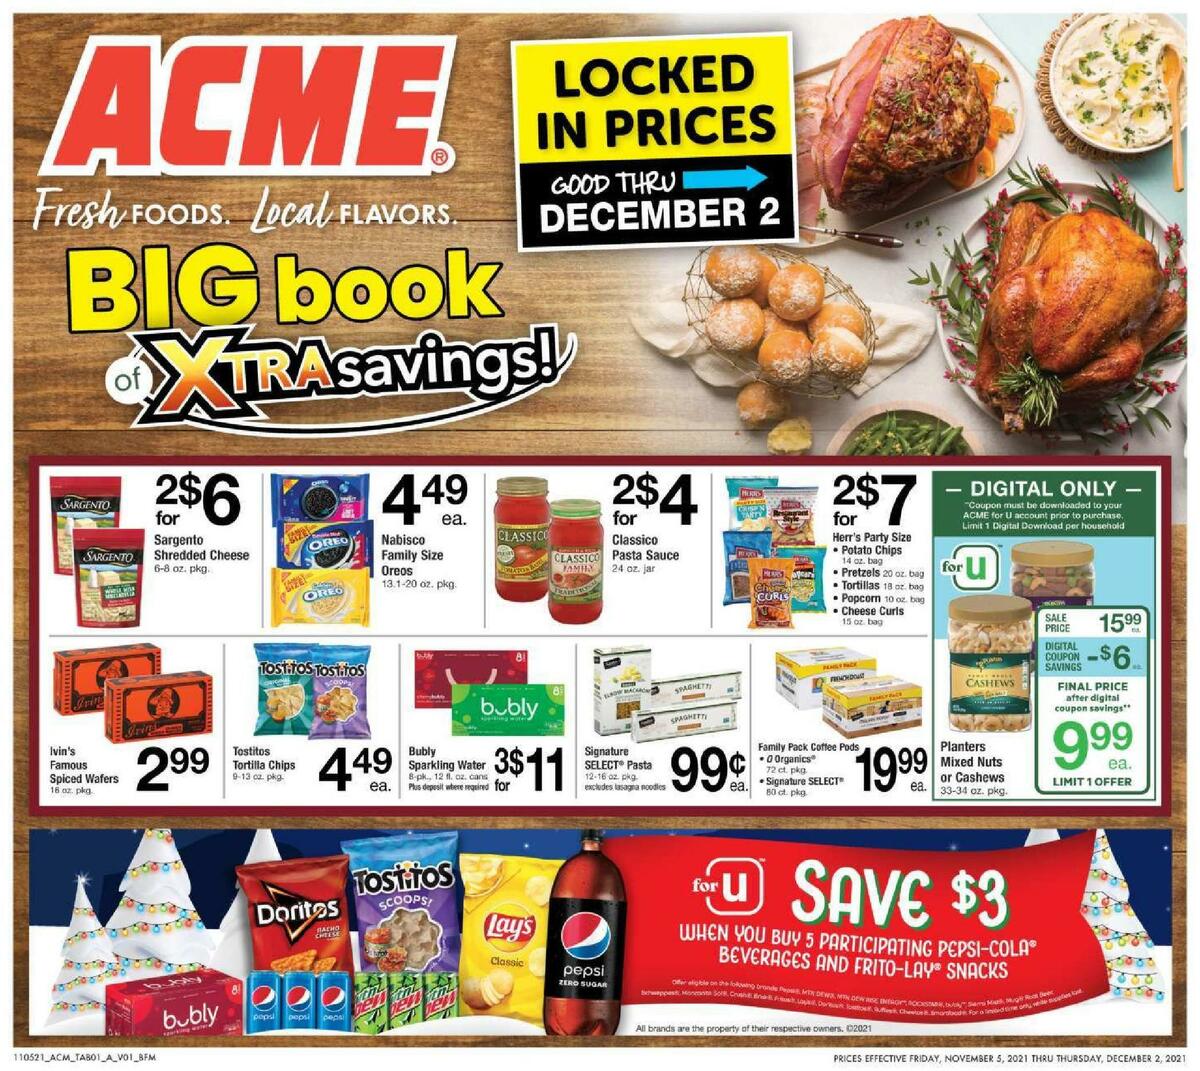 ACME Markets Big Book of Savings Weekly Ad from November 5